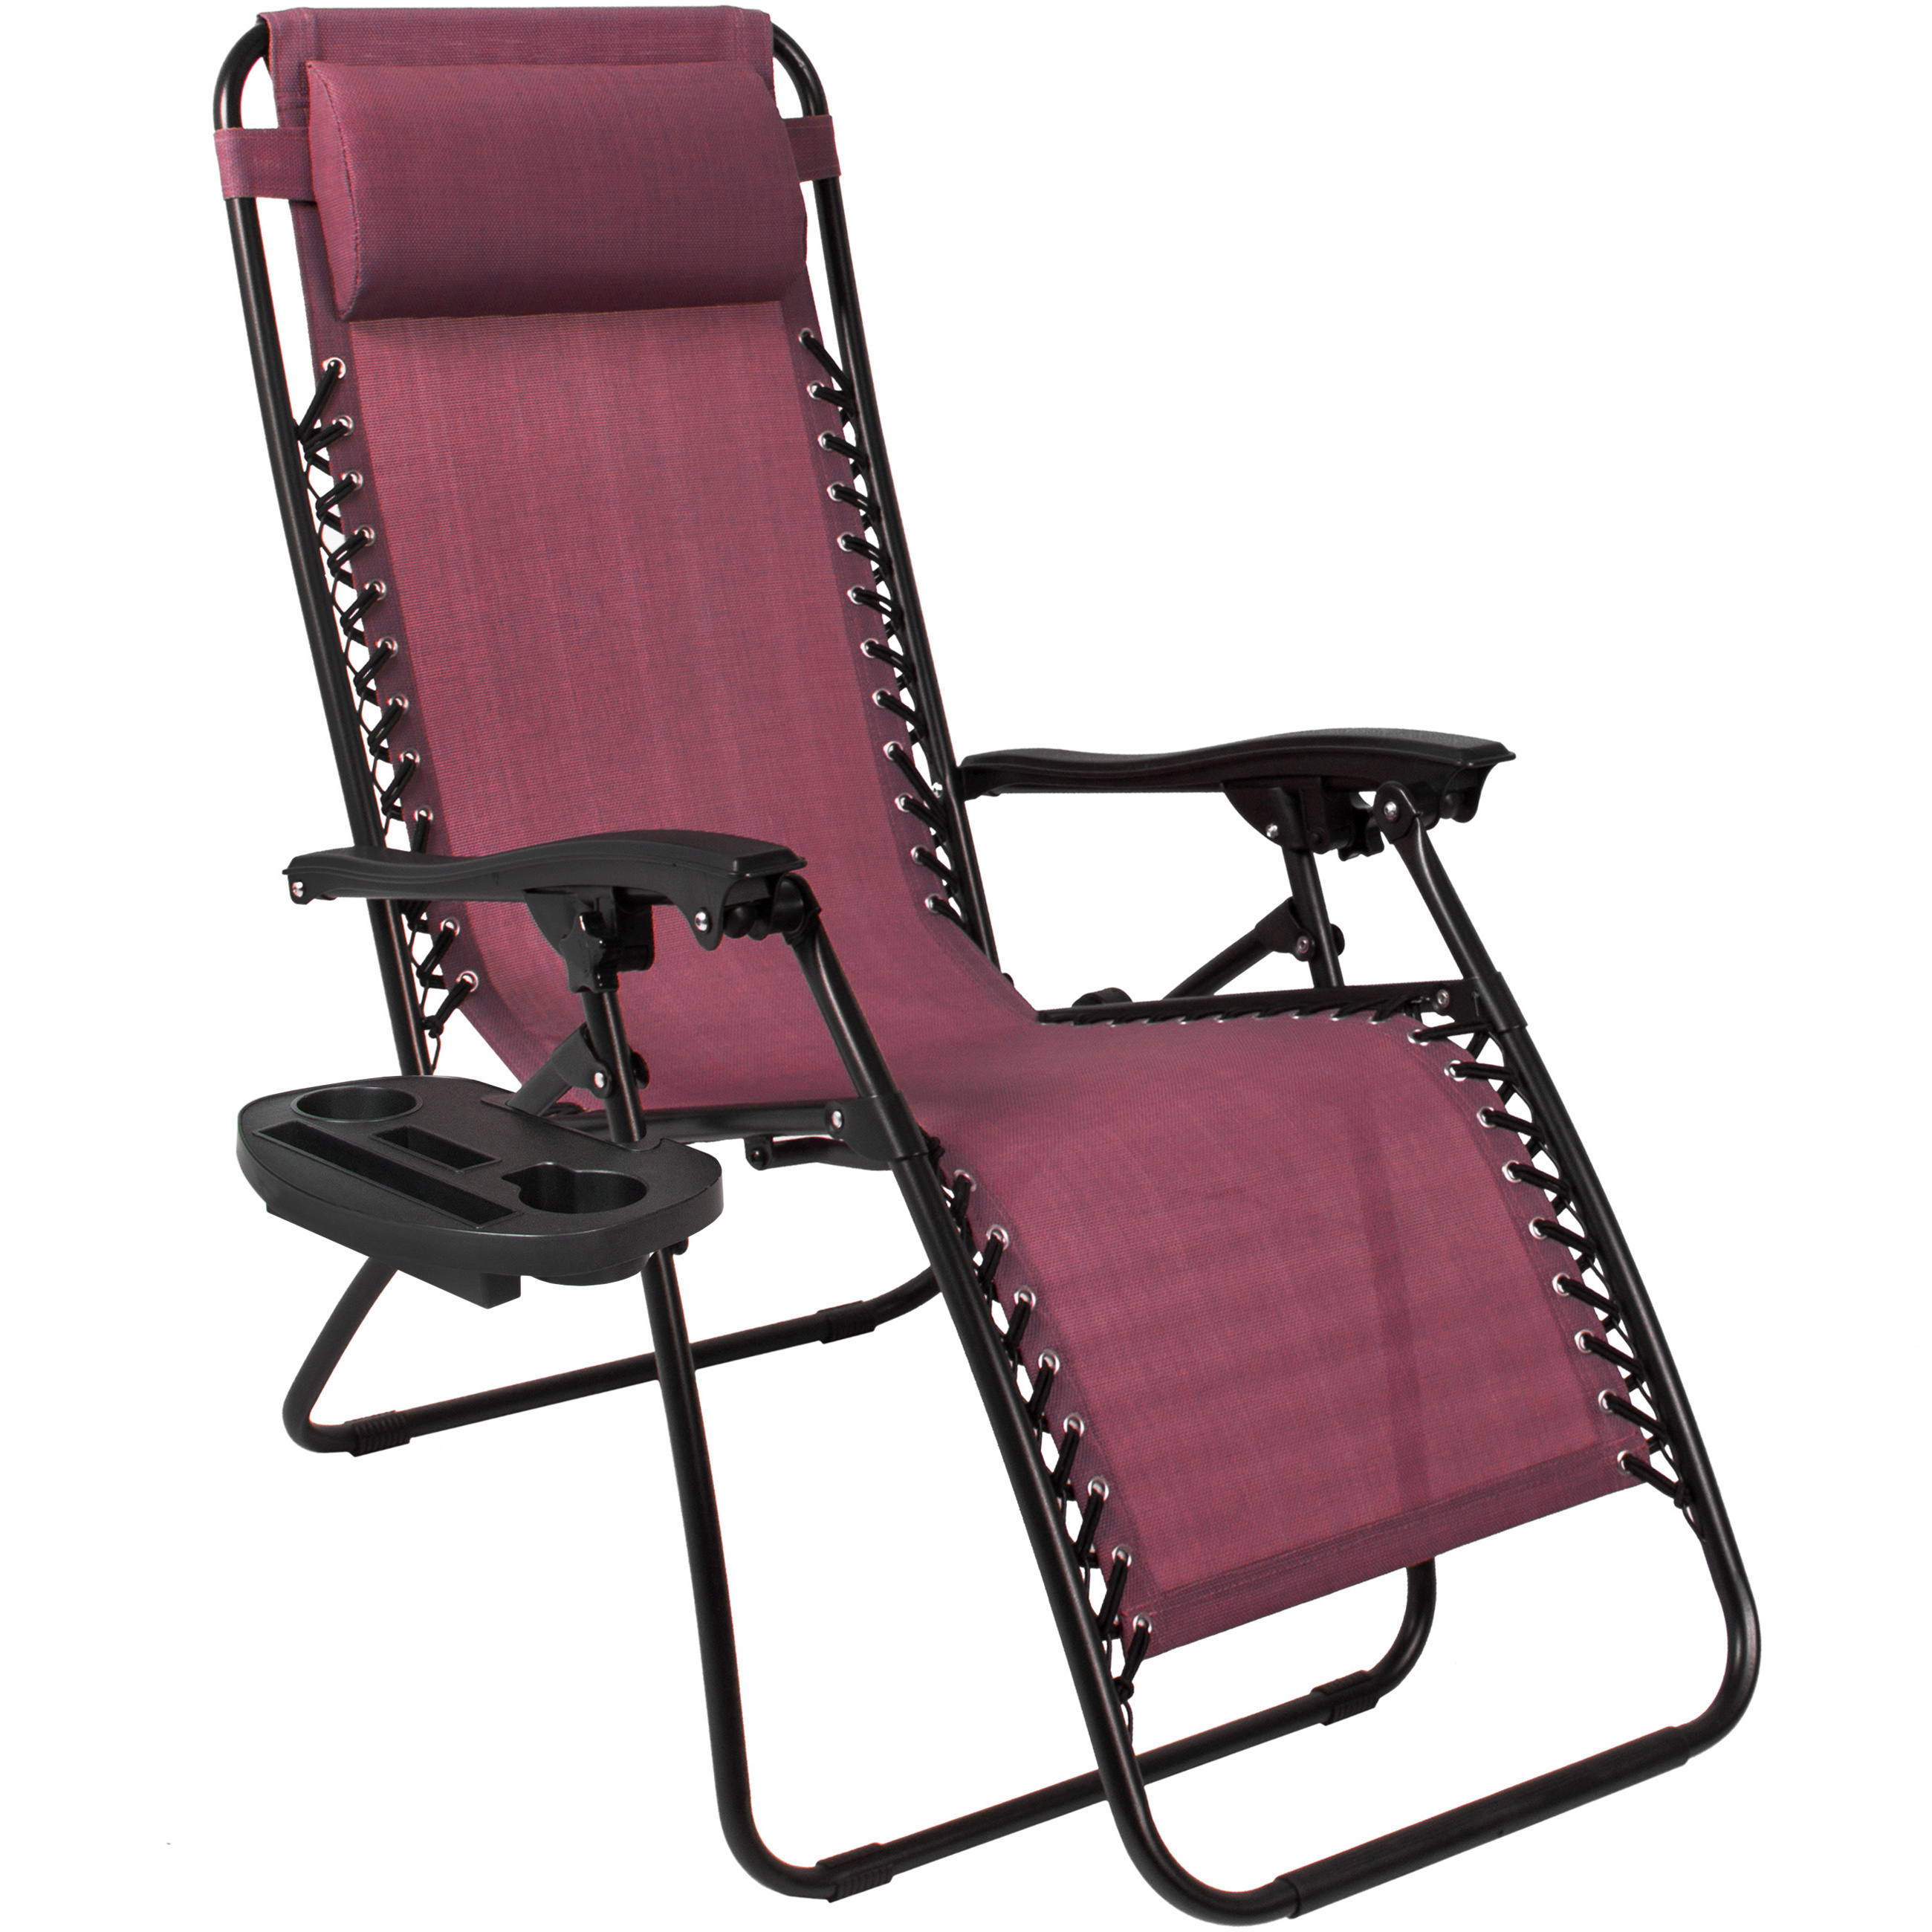  Zero Gravity Beach Chair Sale with Simple Decor